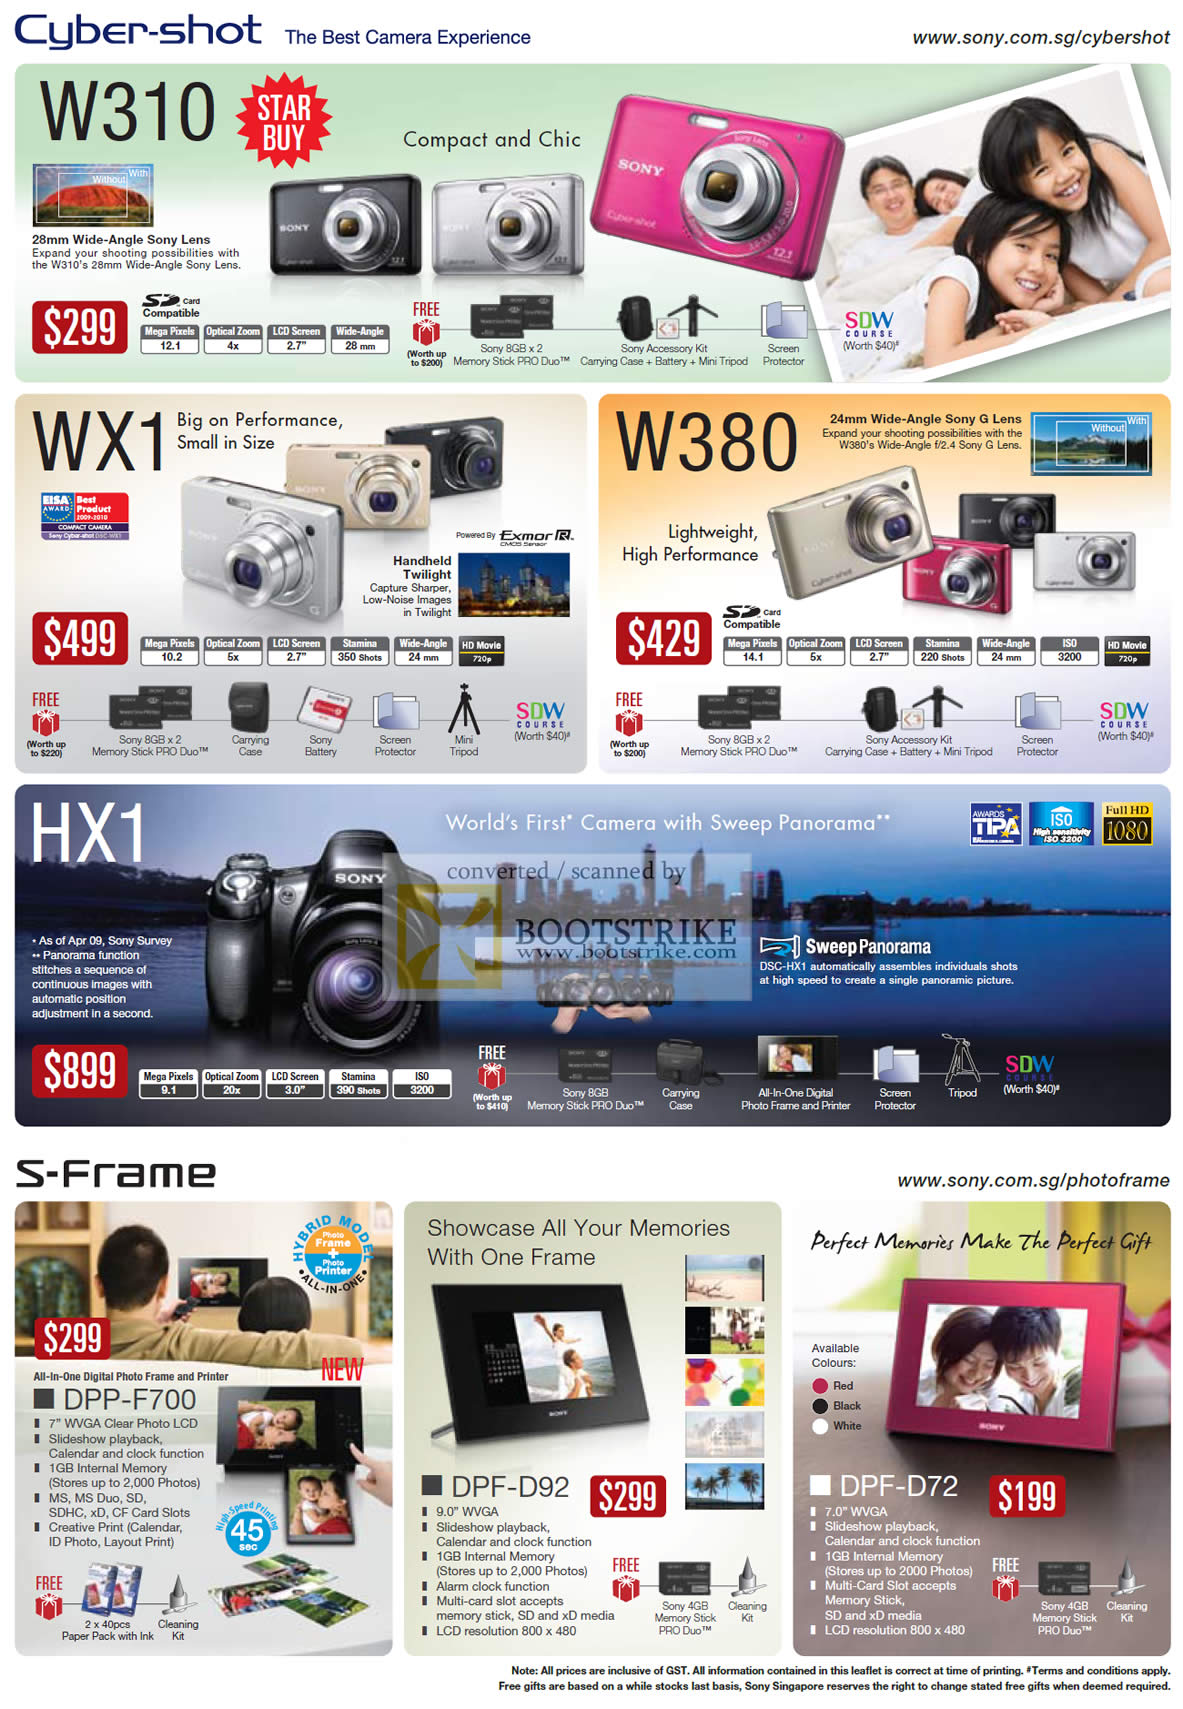 IT Show 2010 price list image brochure of Sony Cybershot Digital Cameras W310 WX1 W380 HX1 Digital Photo S Frame DPP F700 DPF D92 D72